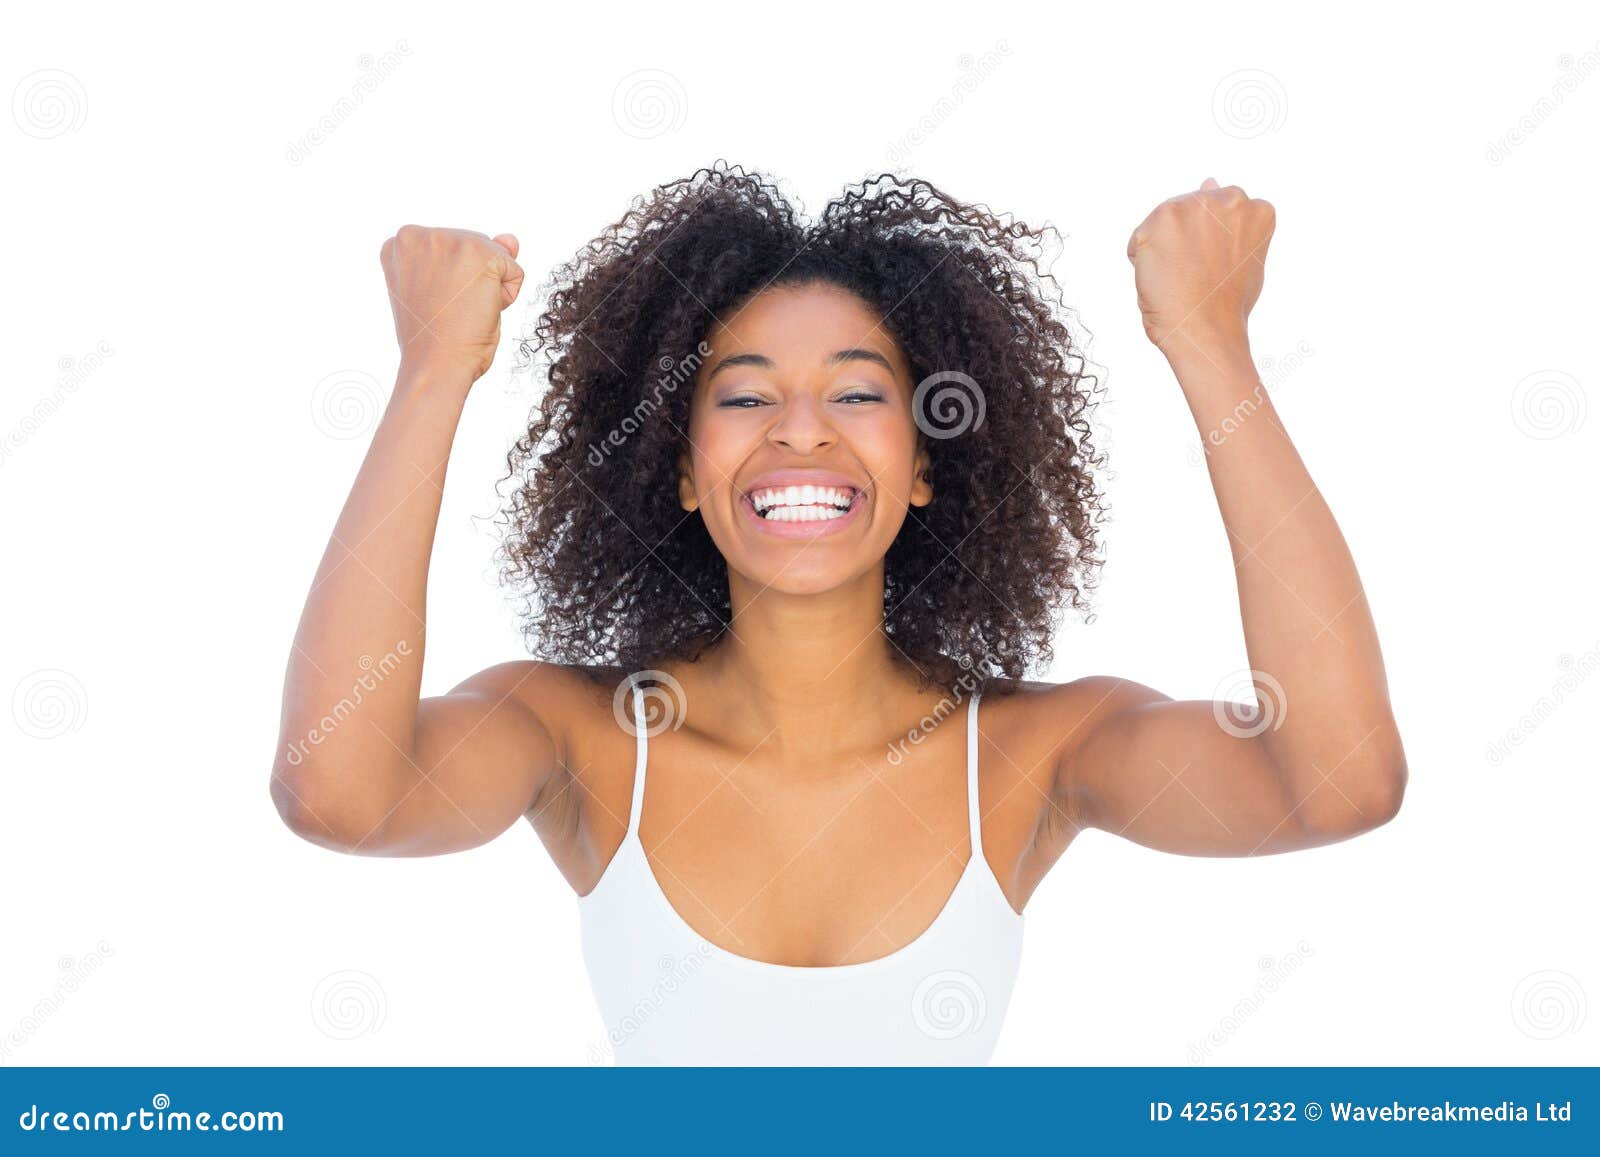 Exciting picture. Happy Black woman. Happy American Black woman. Black women celebrating. Умный афроамериканец.